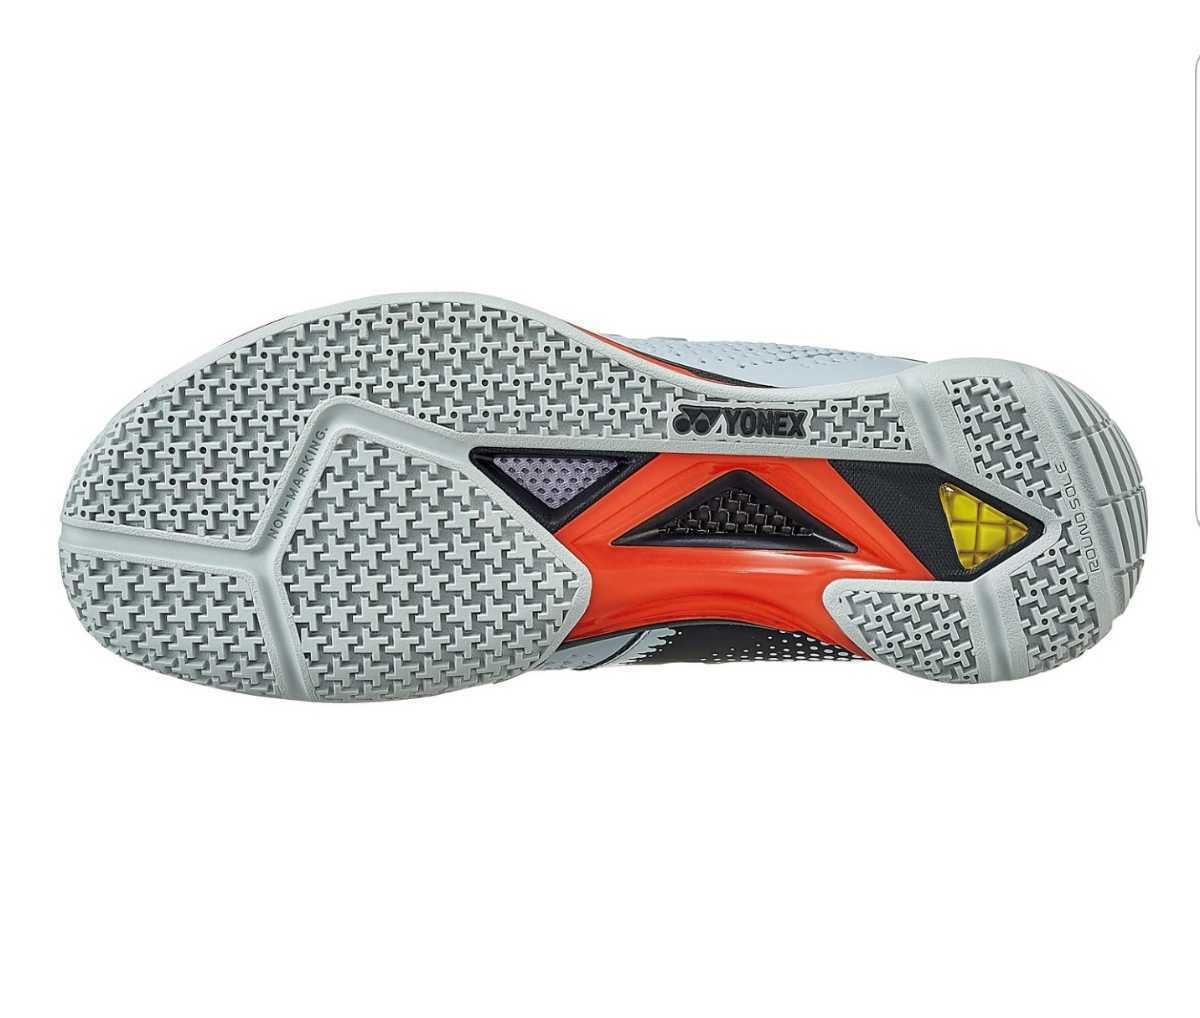  Yonex badminton shoes 27cm SHBELZ2MDeklipshonZMD light gray 